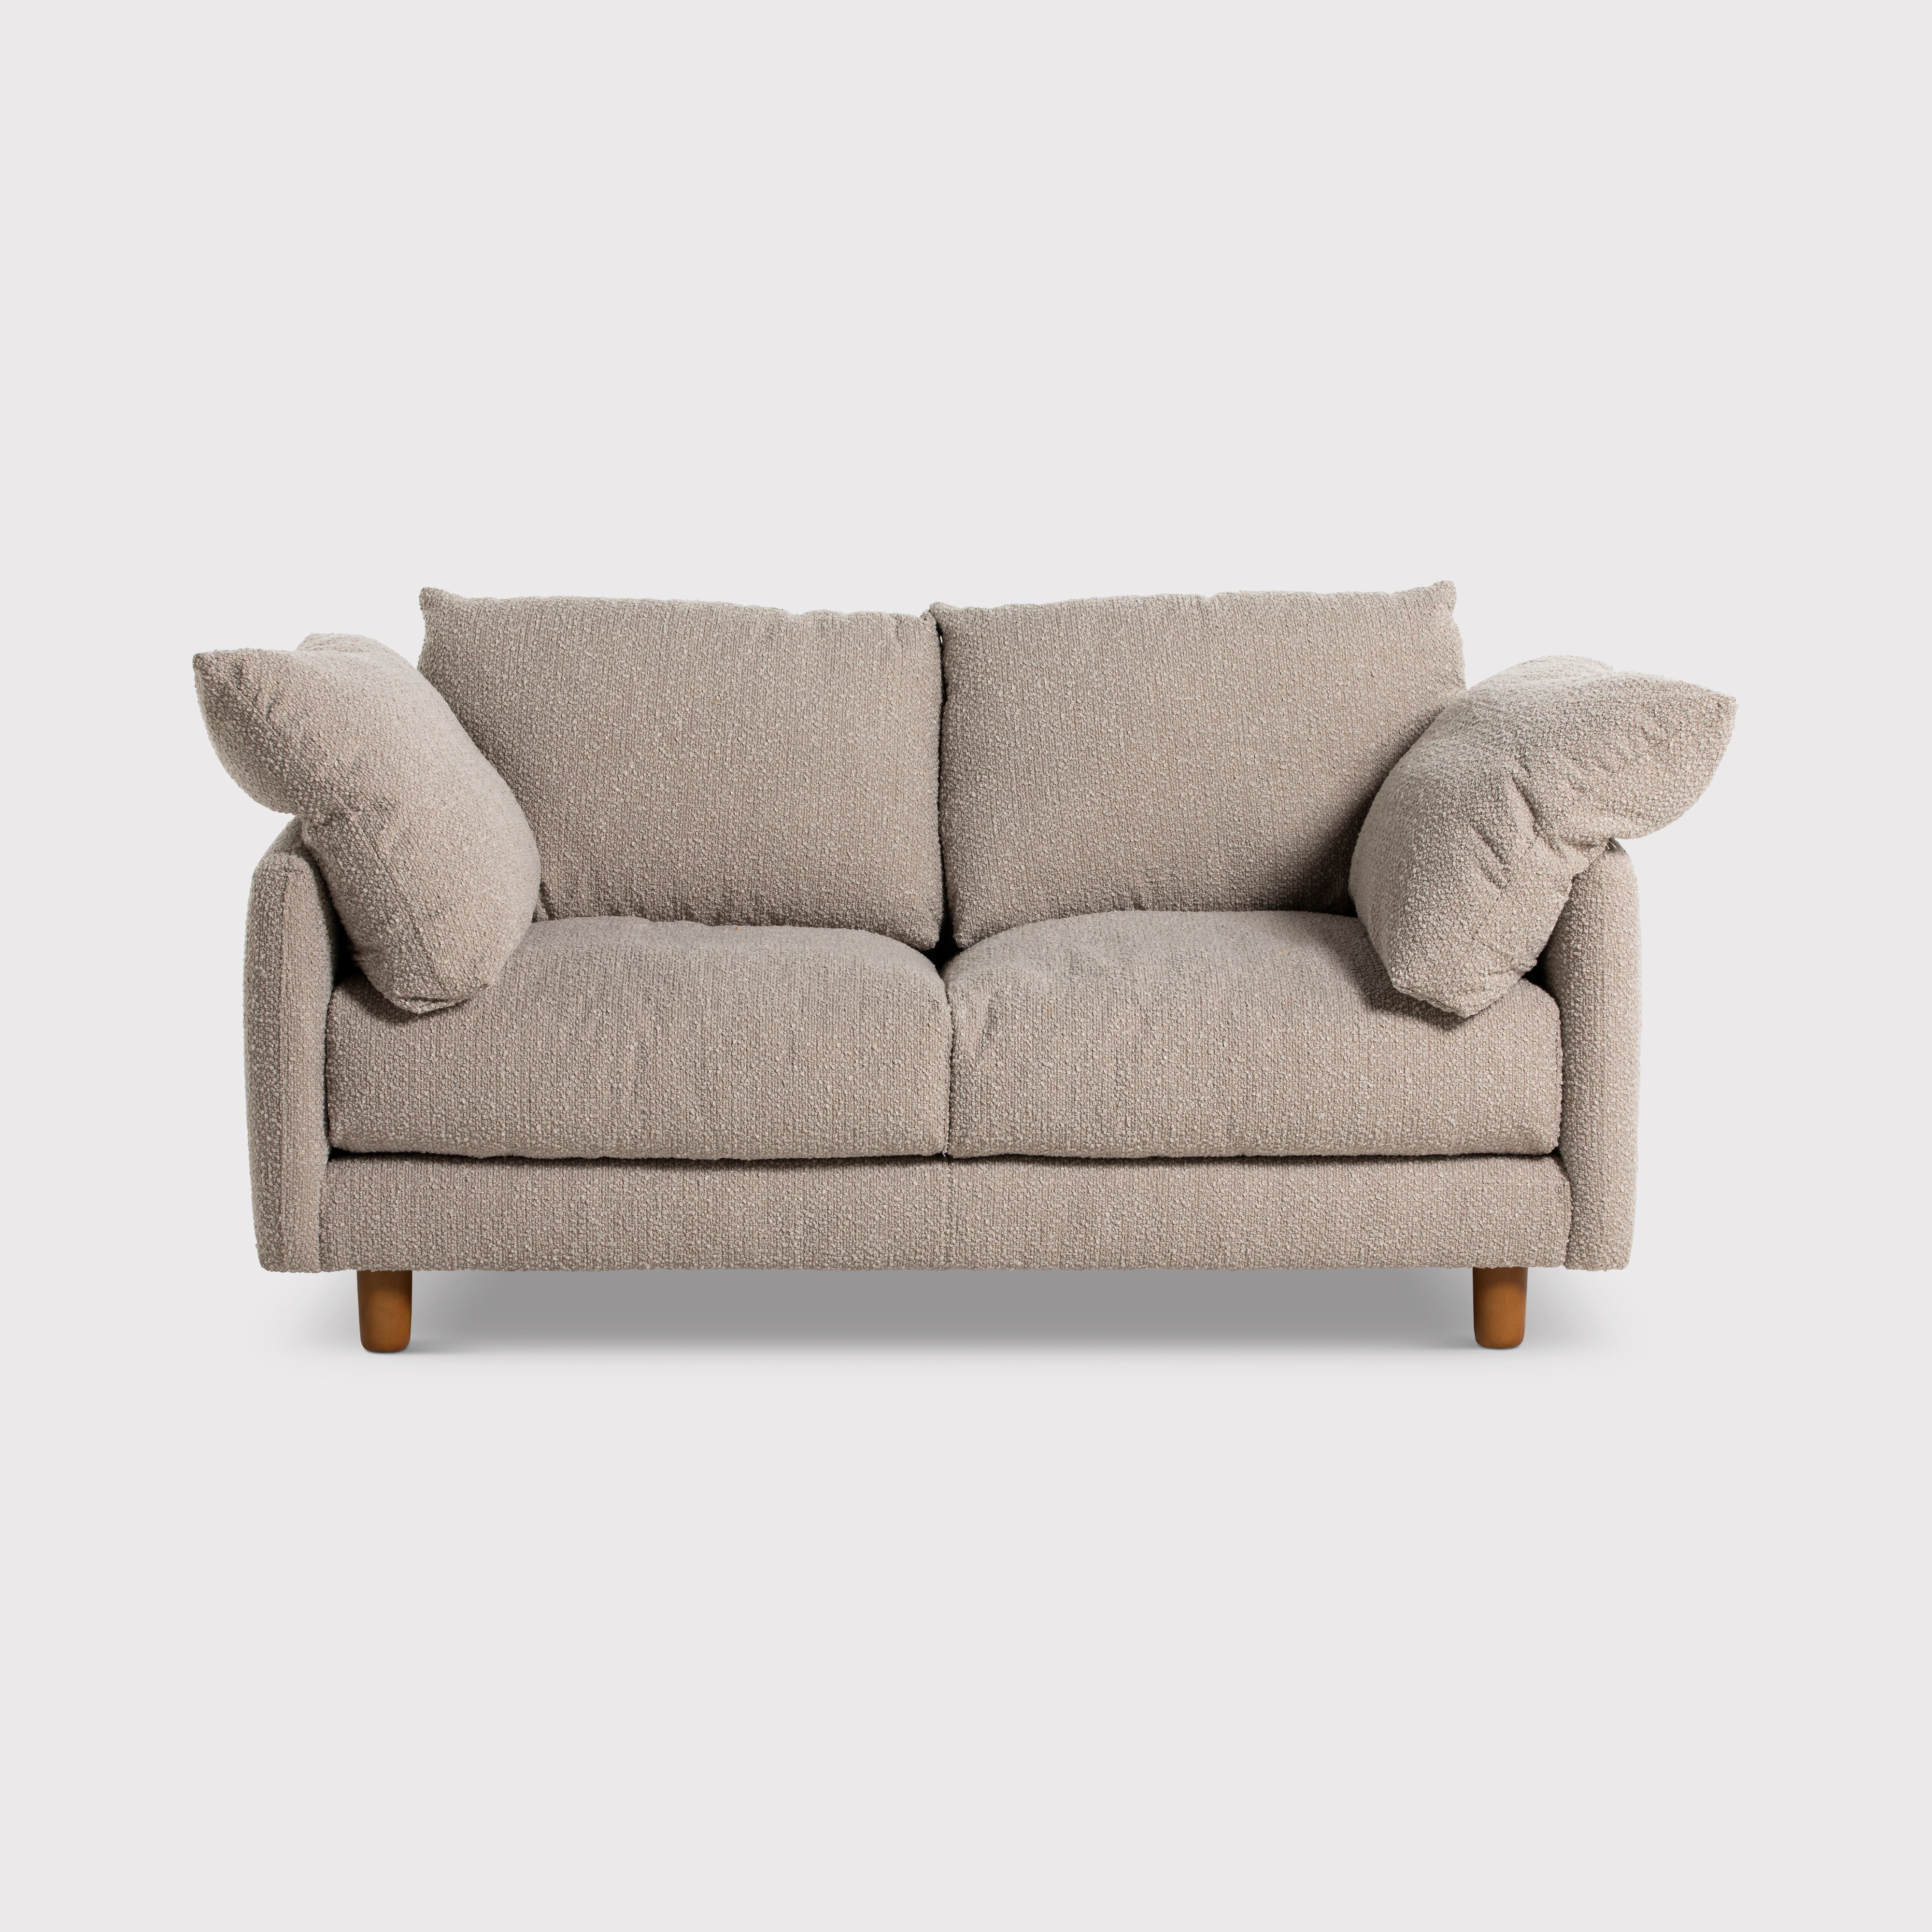 Larkin 2 Seater Sofa, Neutral Fabric - Barker & Stonehouse - image 1